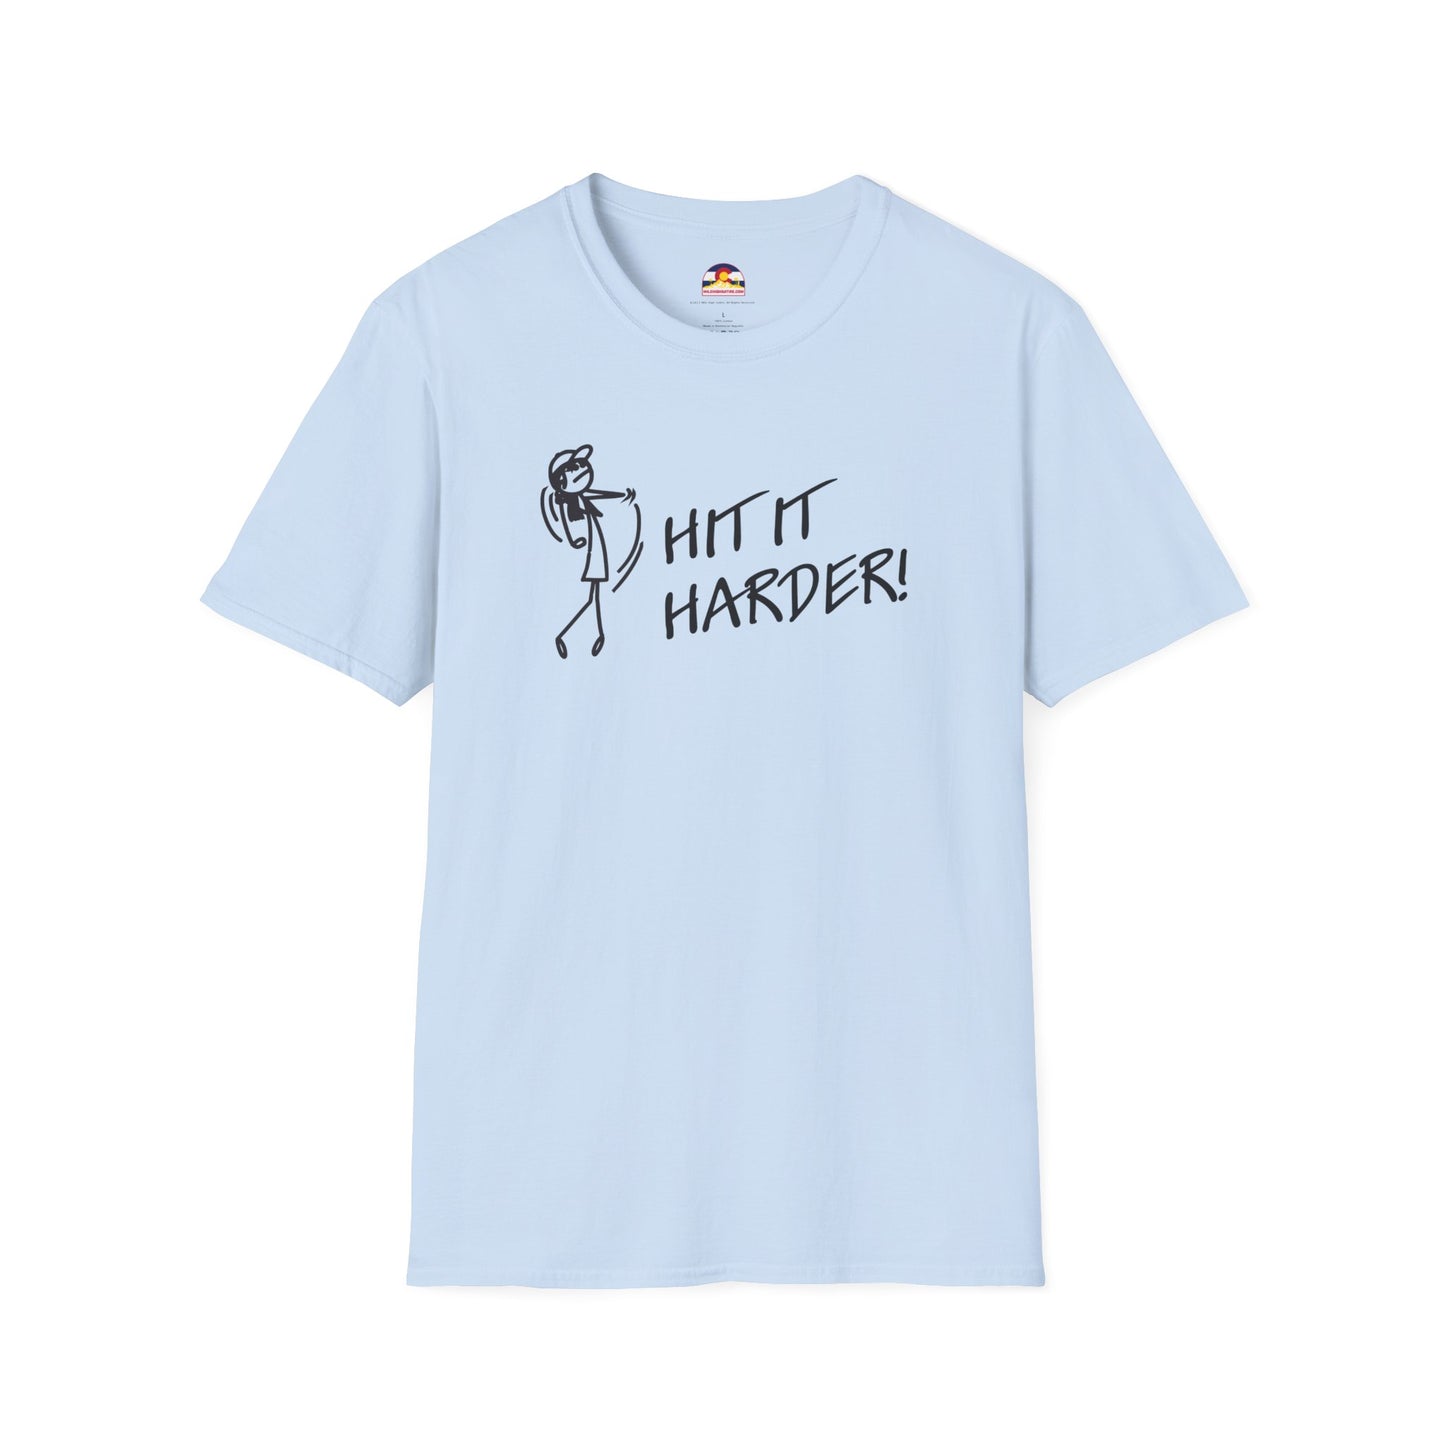 Hit It Harder - Women's T-Shirt